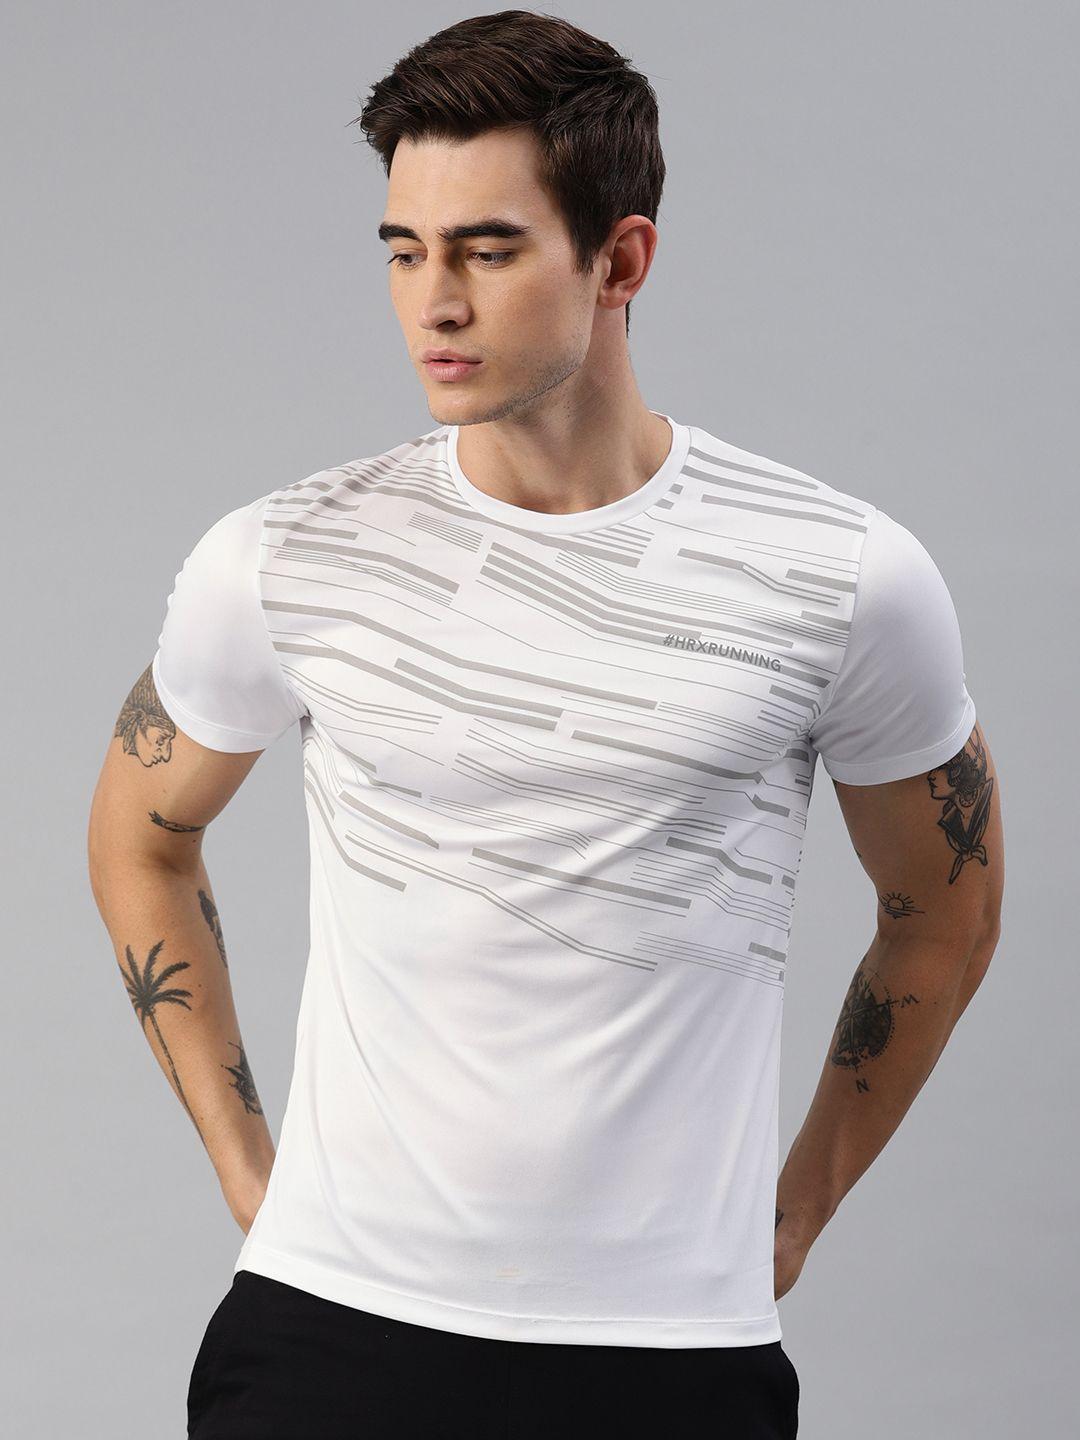 hrx by hrithik roshan men white printed rapid dry lightweight running t-shirt